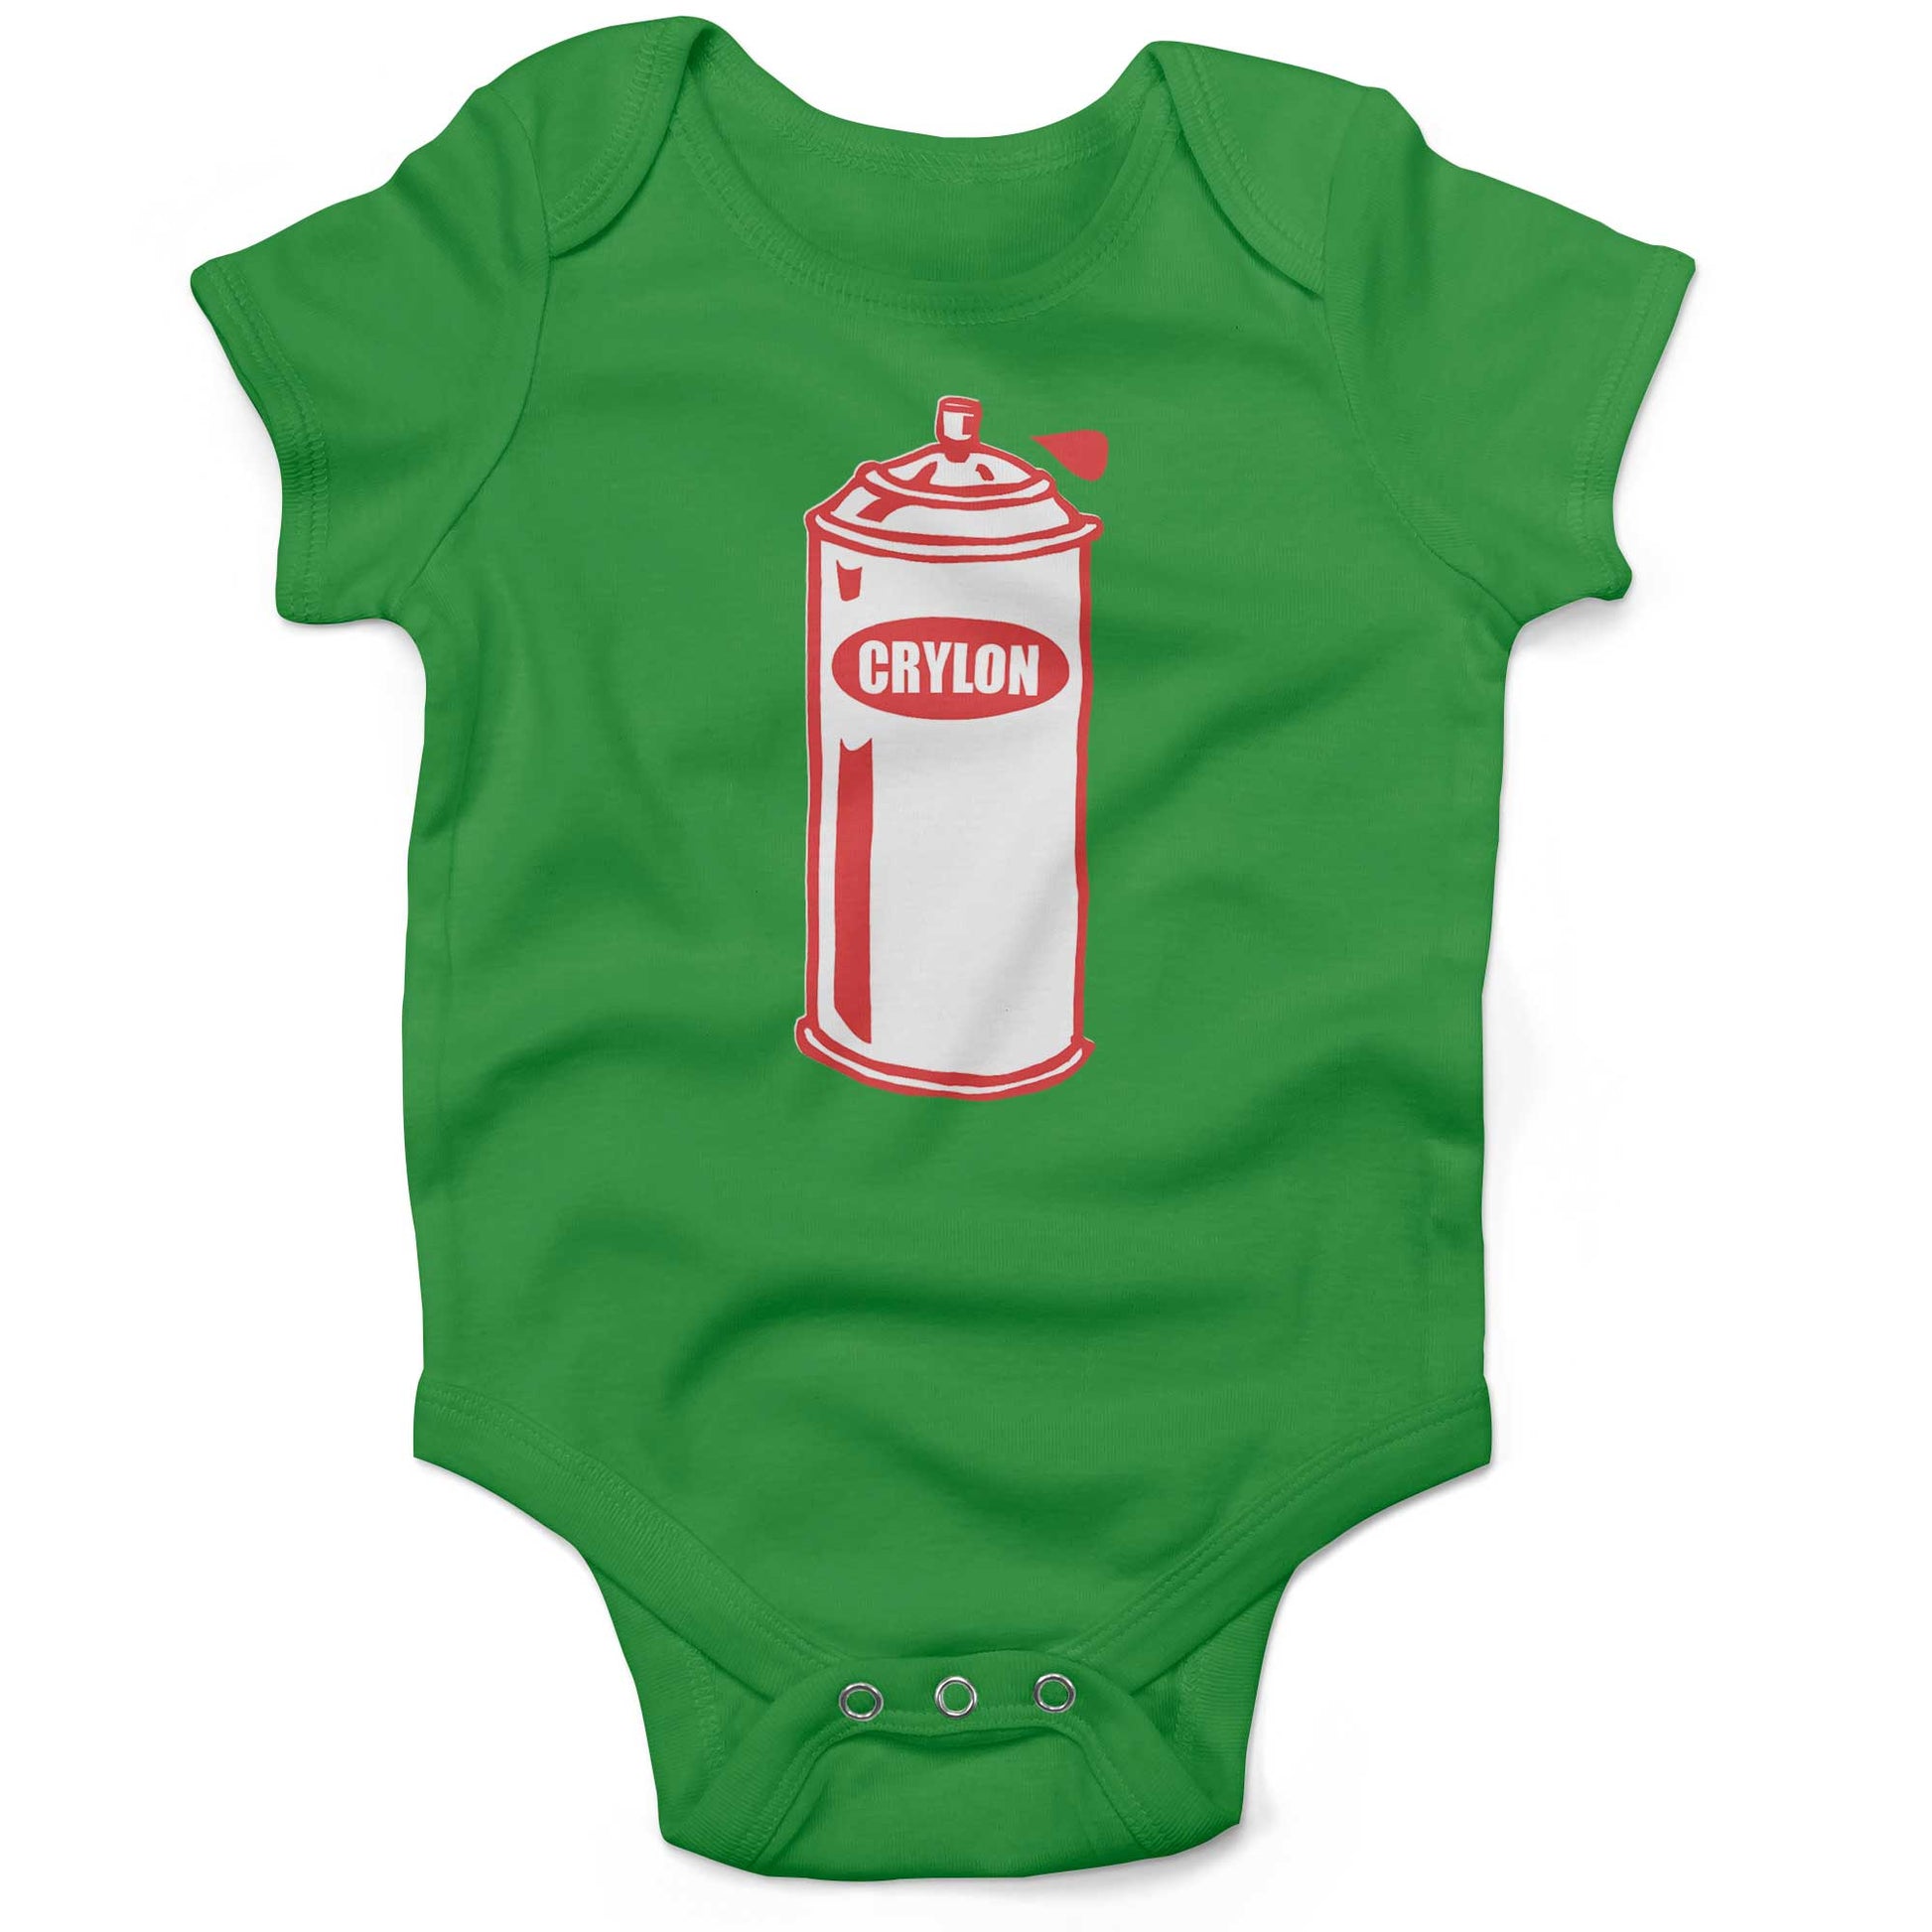 Crylon Cans Infant Bodysuit or Raglan Tee-Grass Green-3-6 months